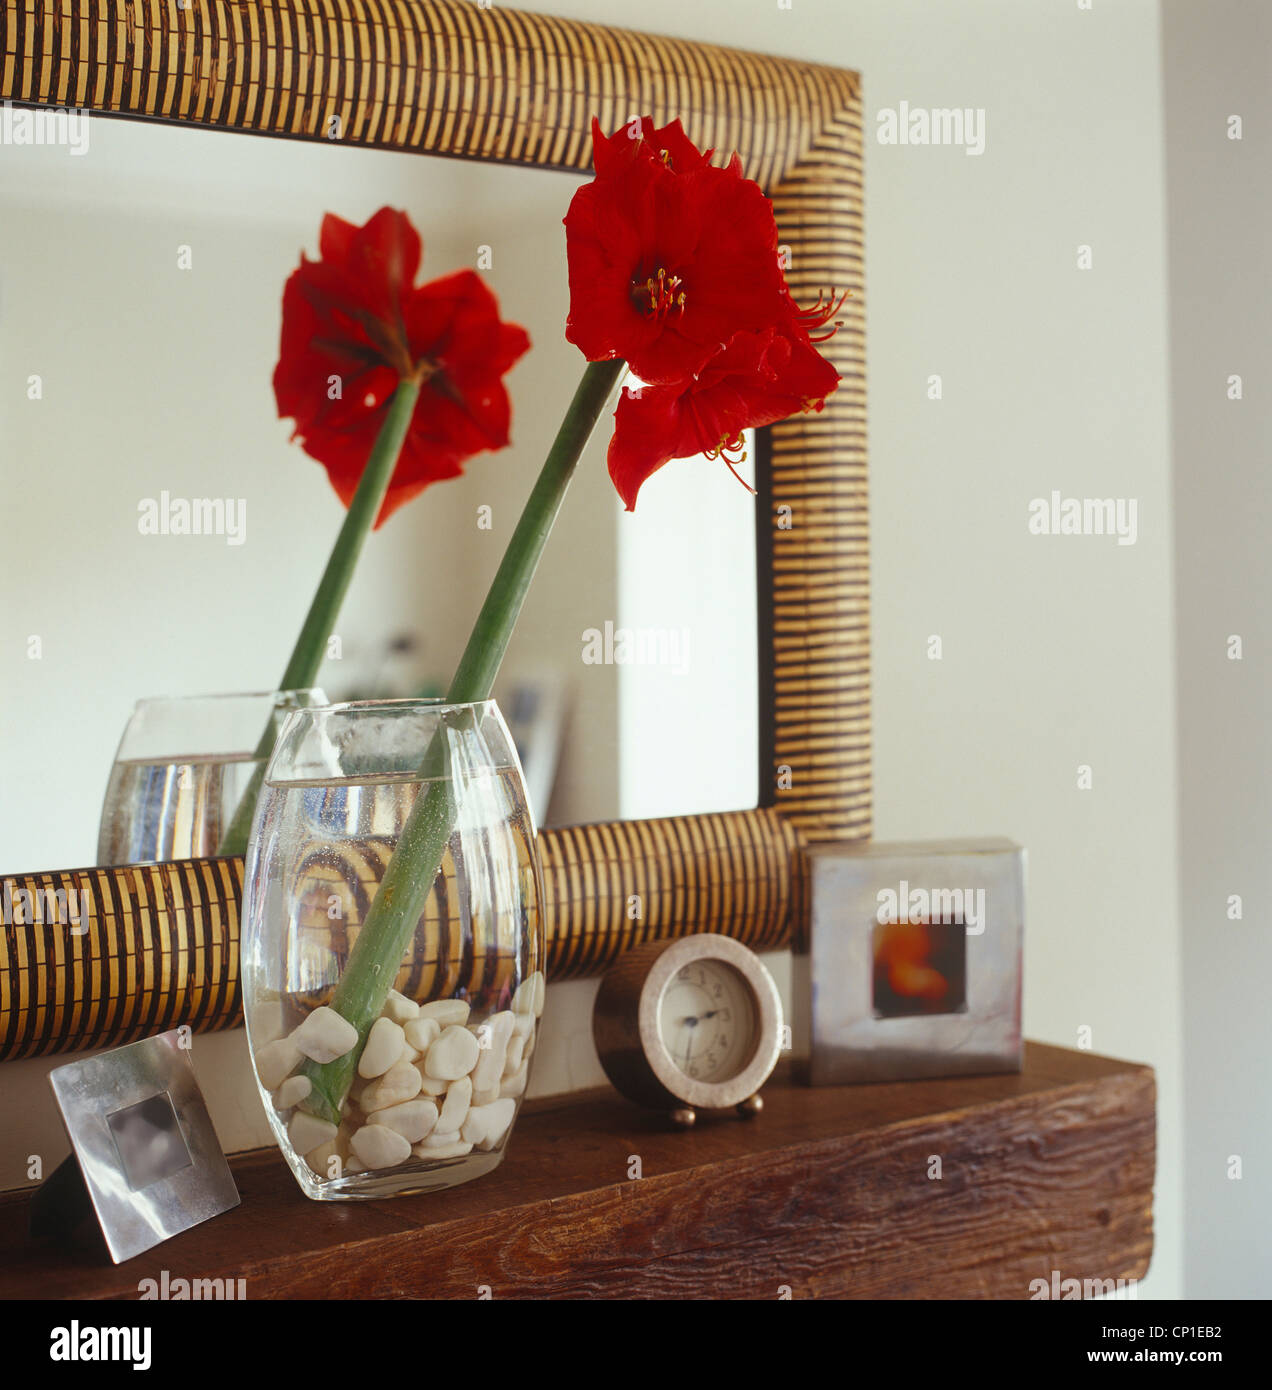 Red Amaryllis flower in glass vase on mantelpiece Stock Photo